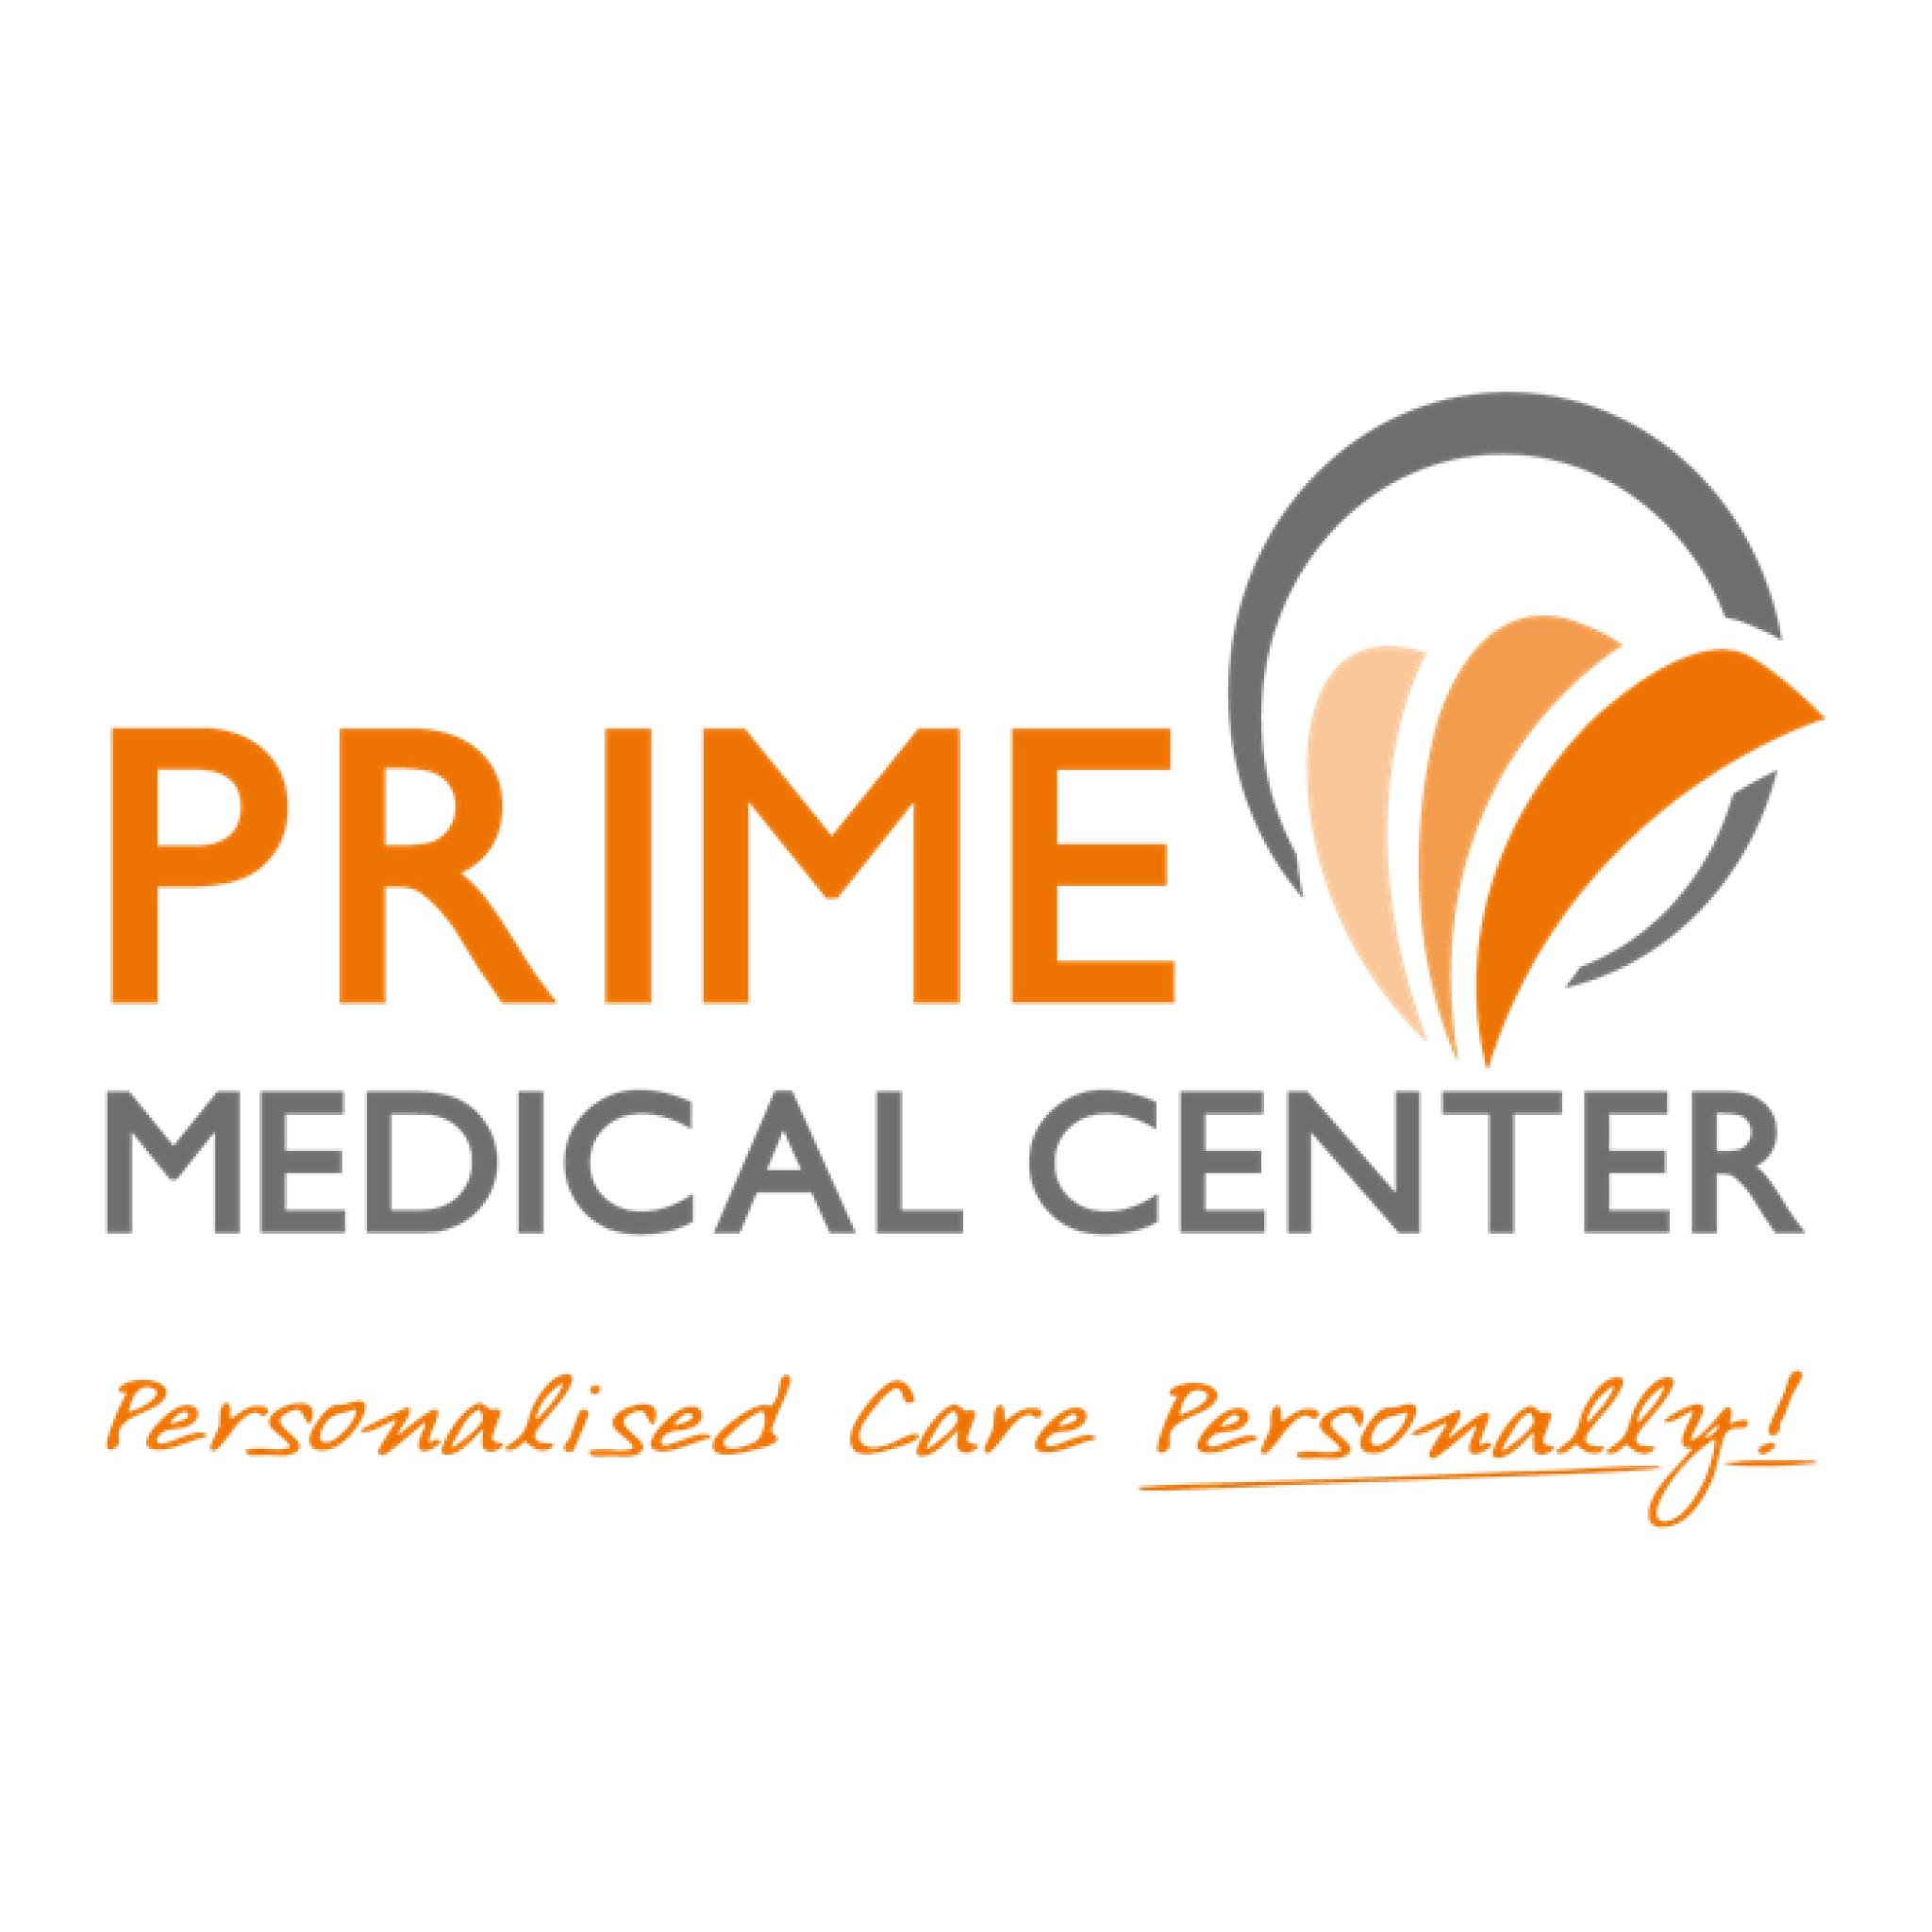 Prime Medical Center - Motor City